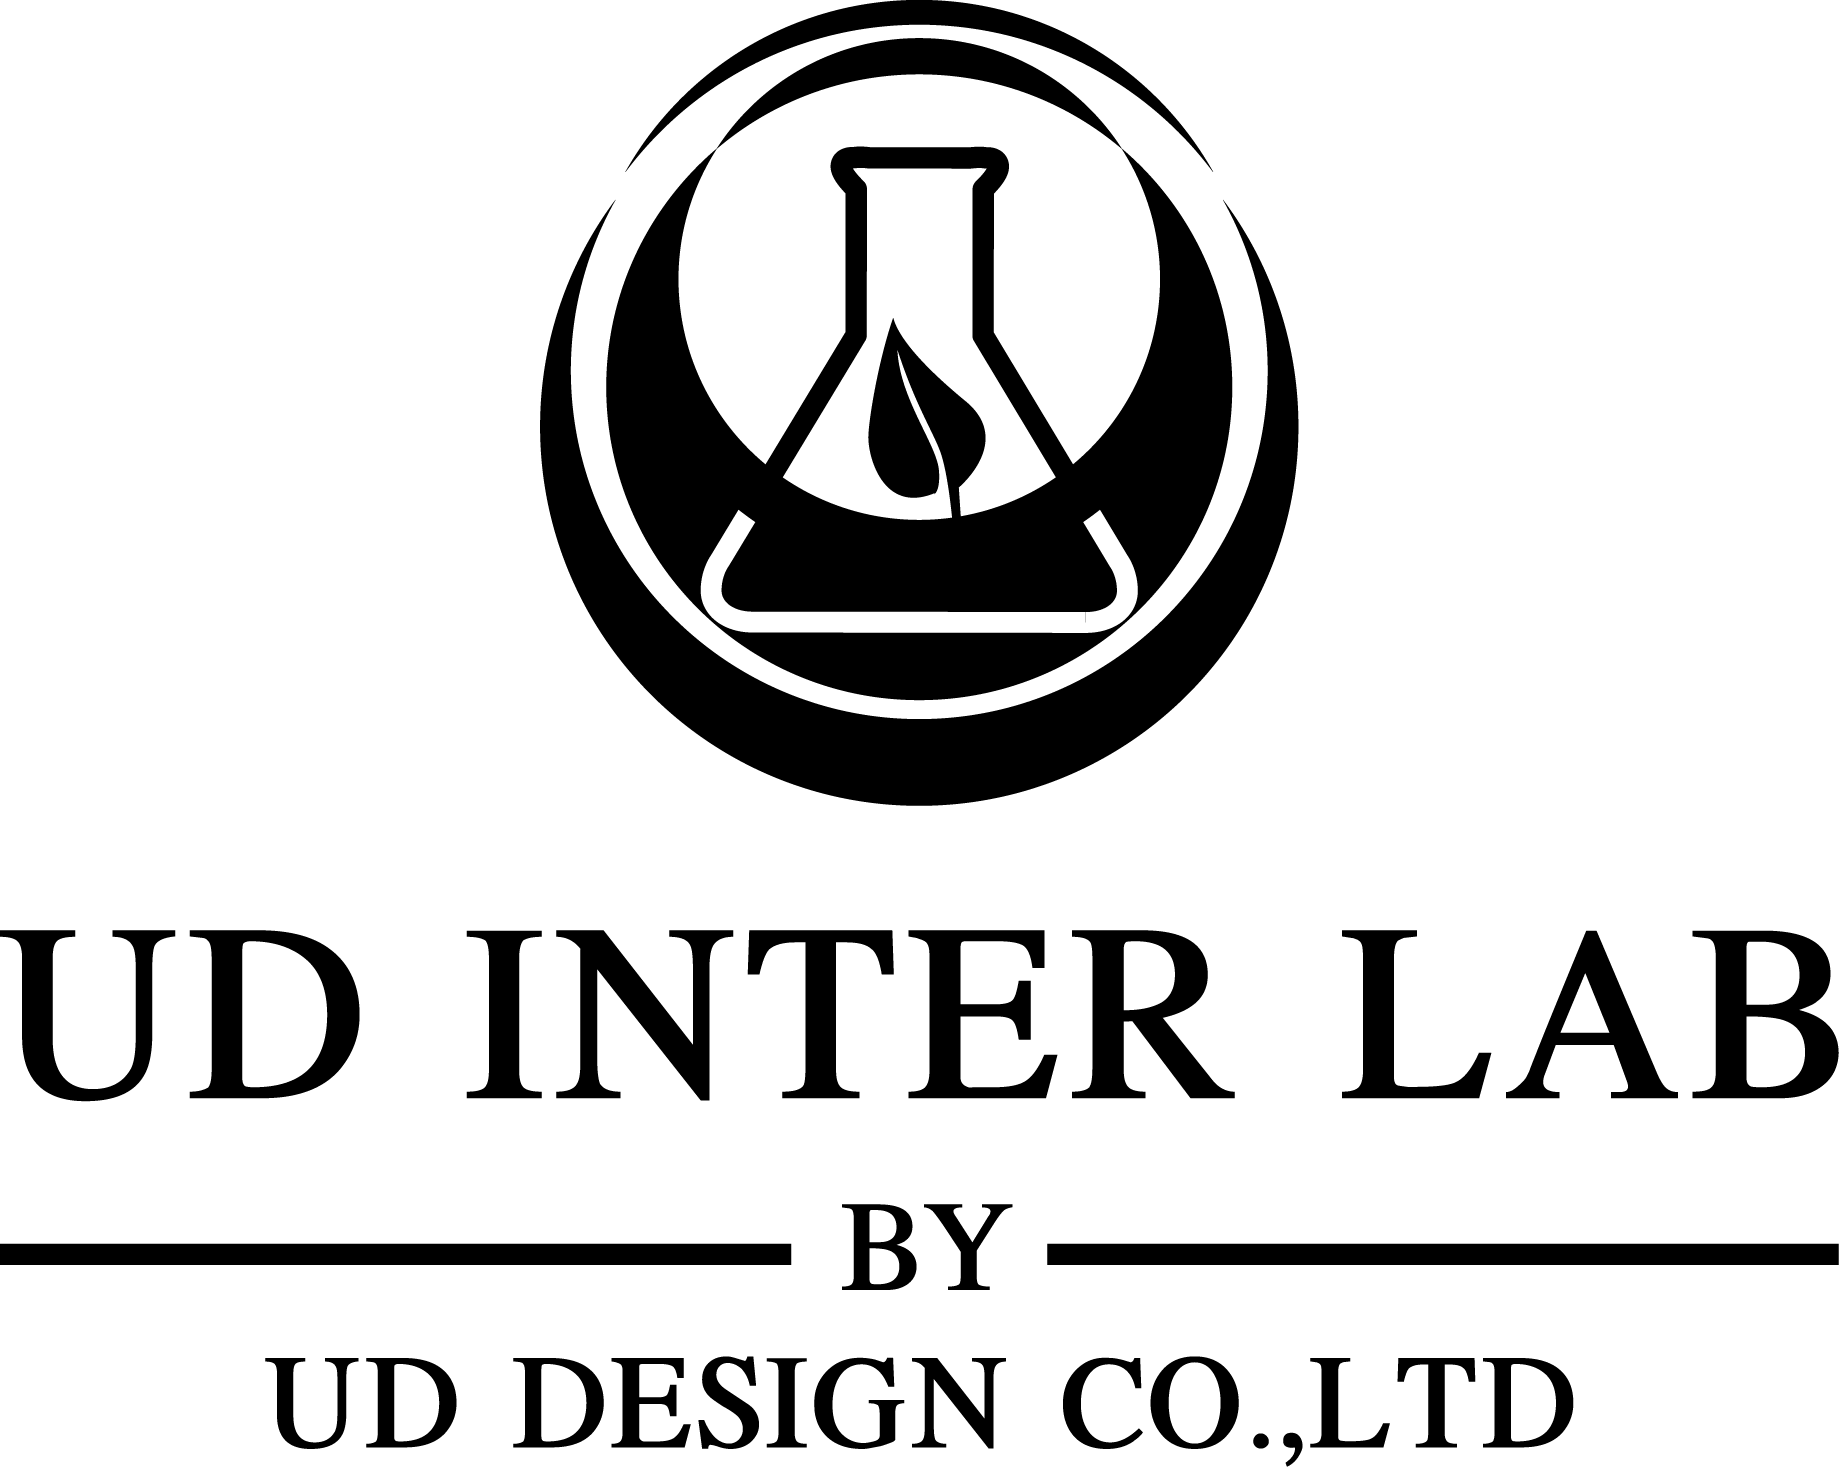 UD Inter lab logo